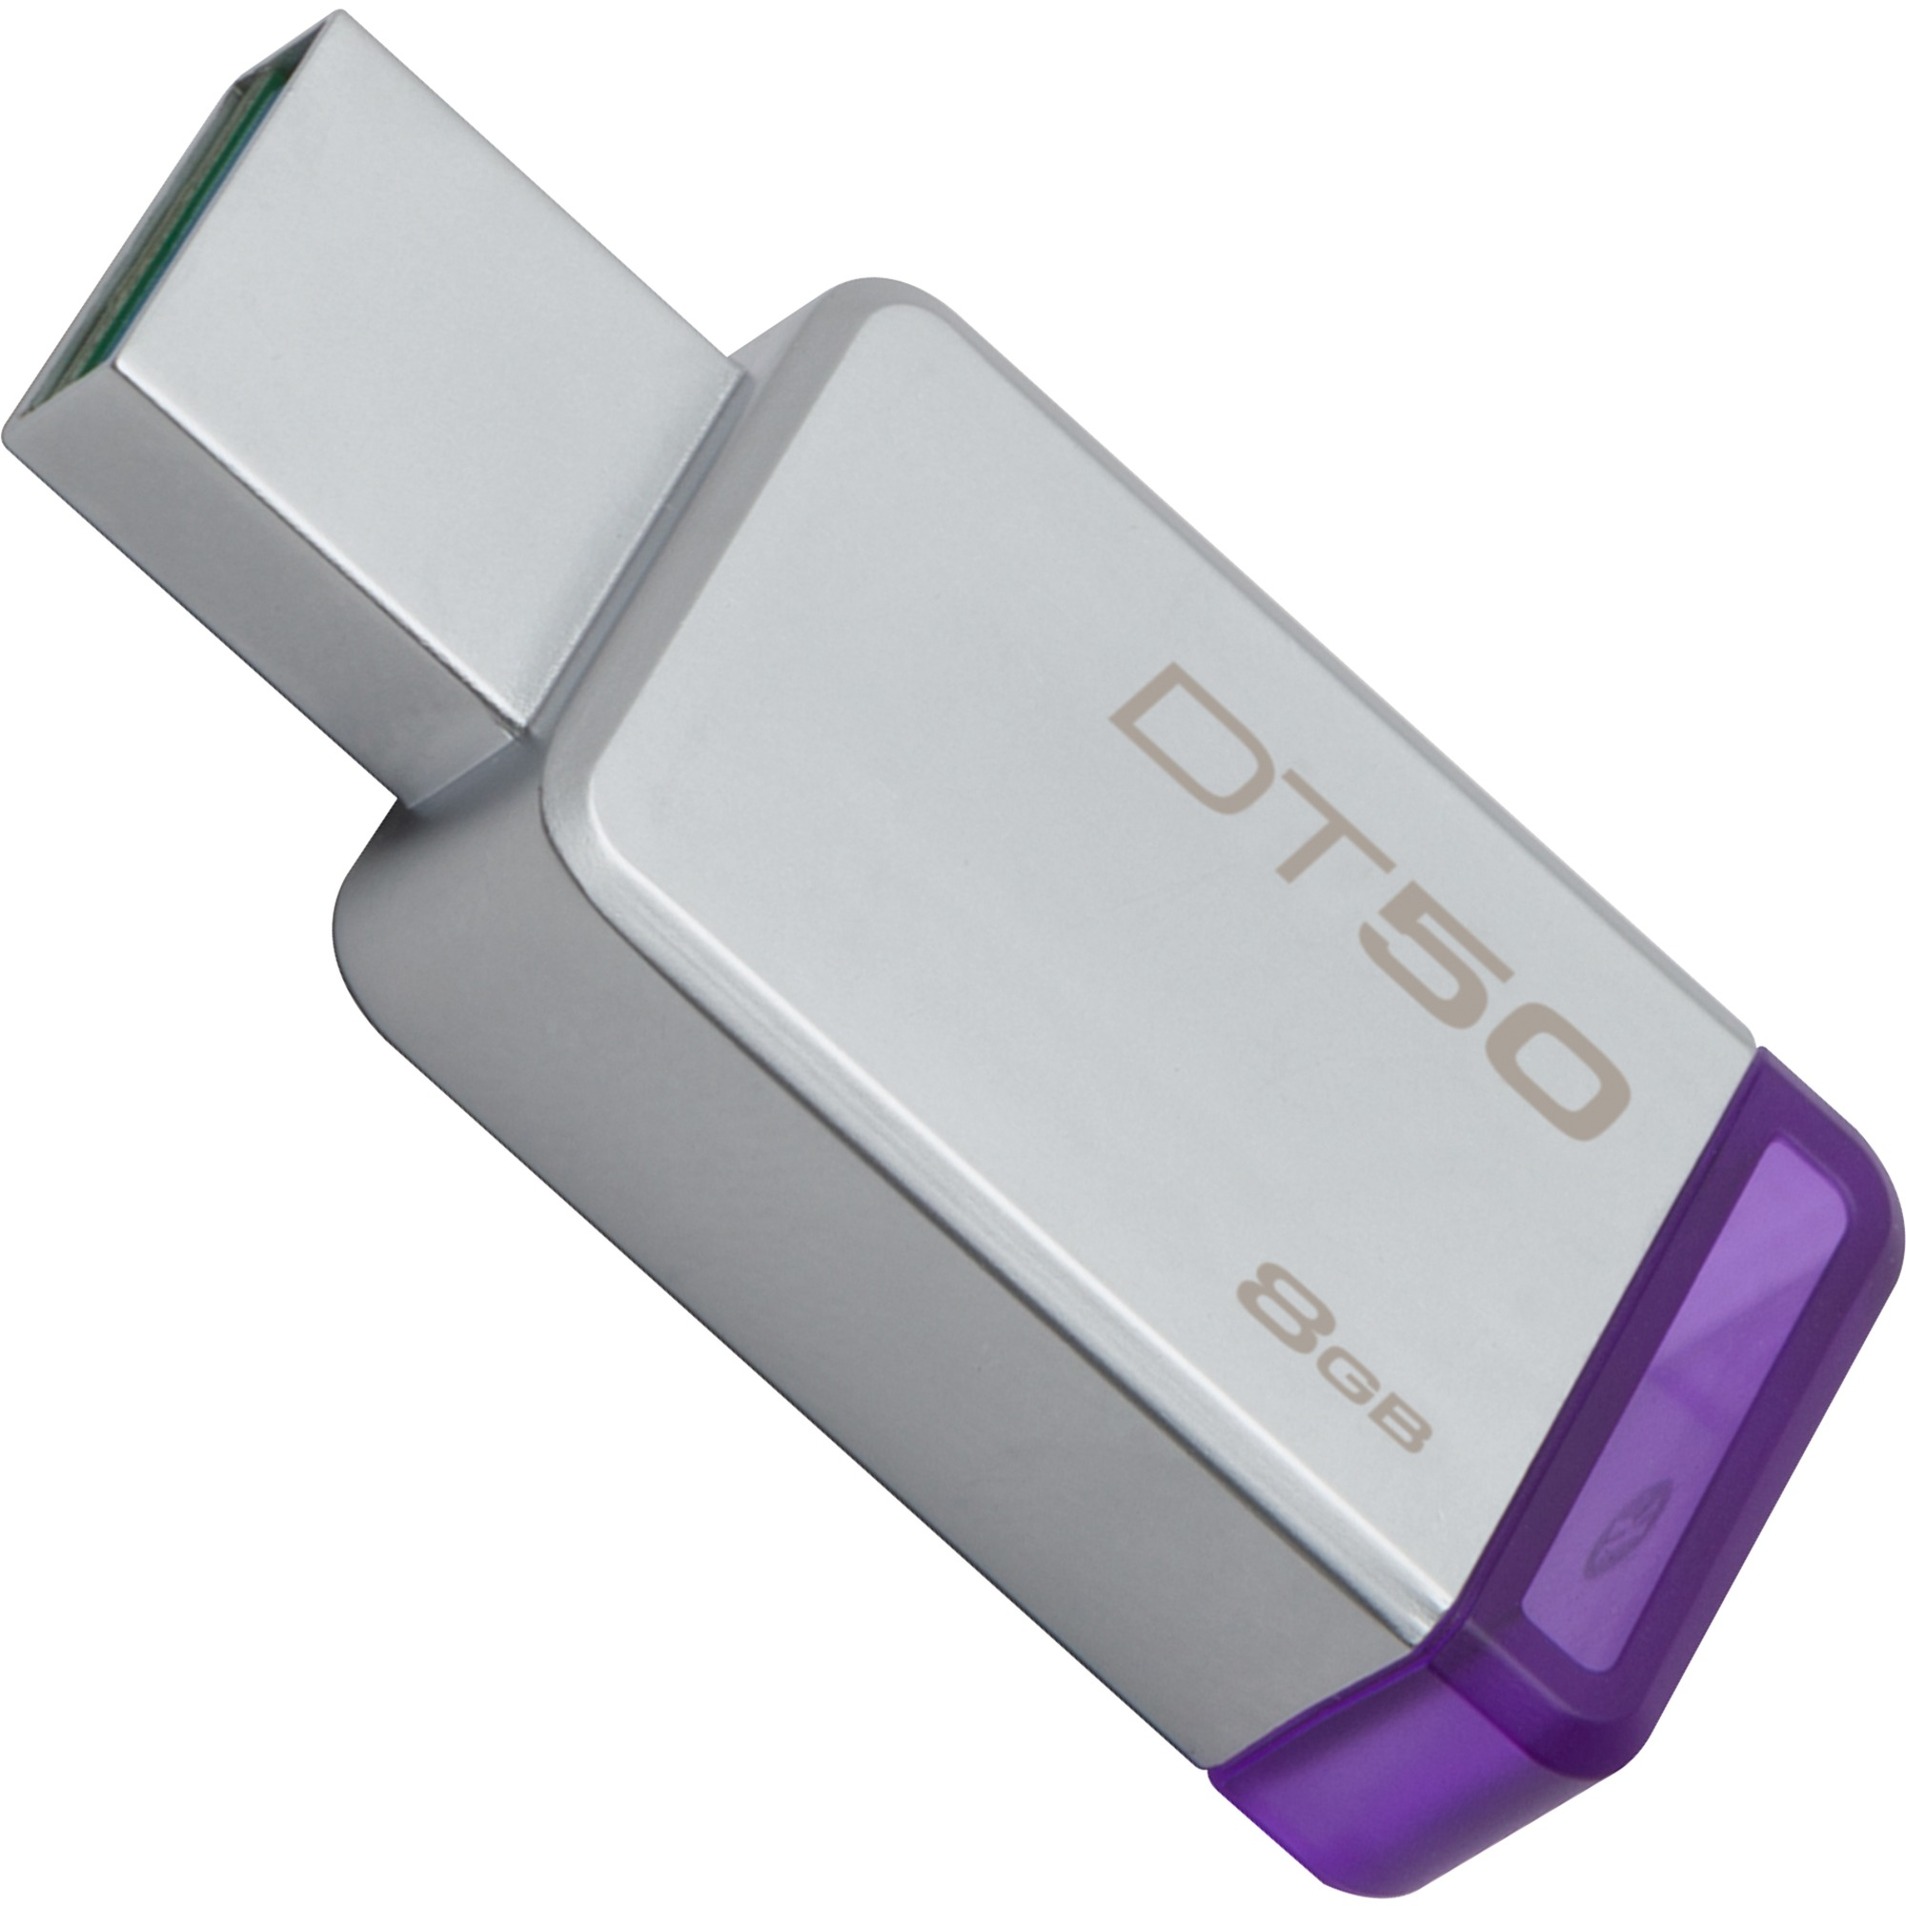 DataTraveler 50 8GB pami?? USB 3.0 (3.1 Gen 1) Z??cze USB typu A Fioletowy, Srebrny, No?nik Pendrive USB